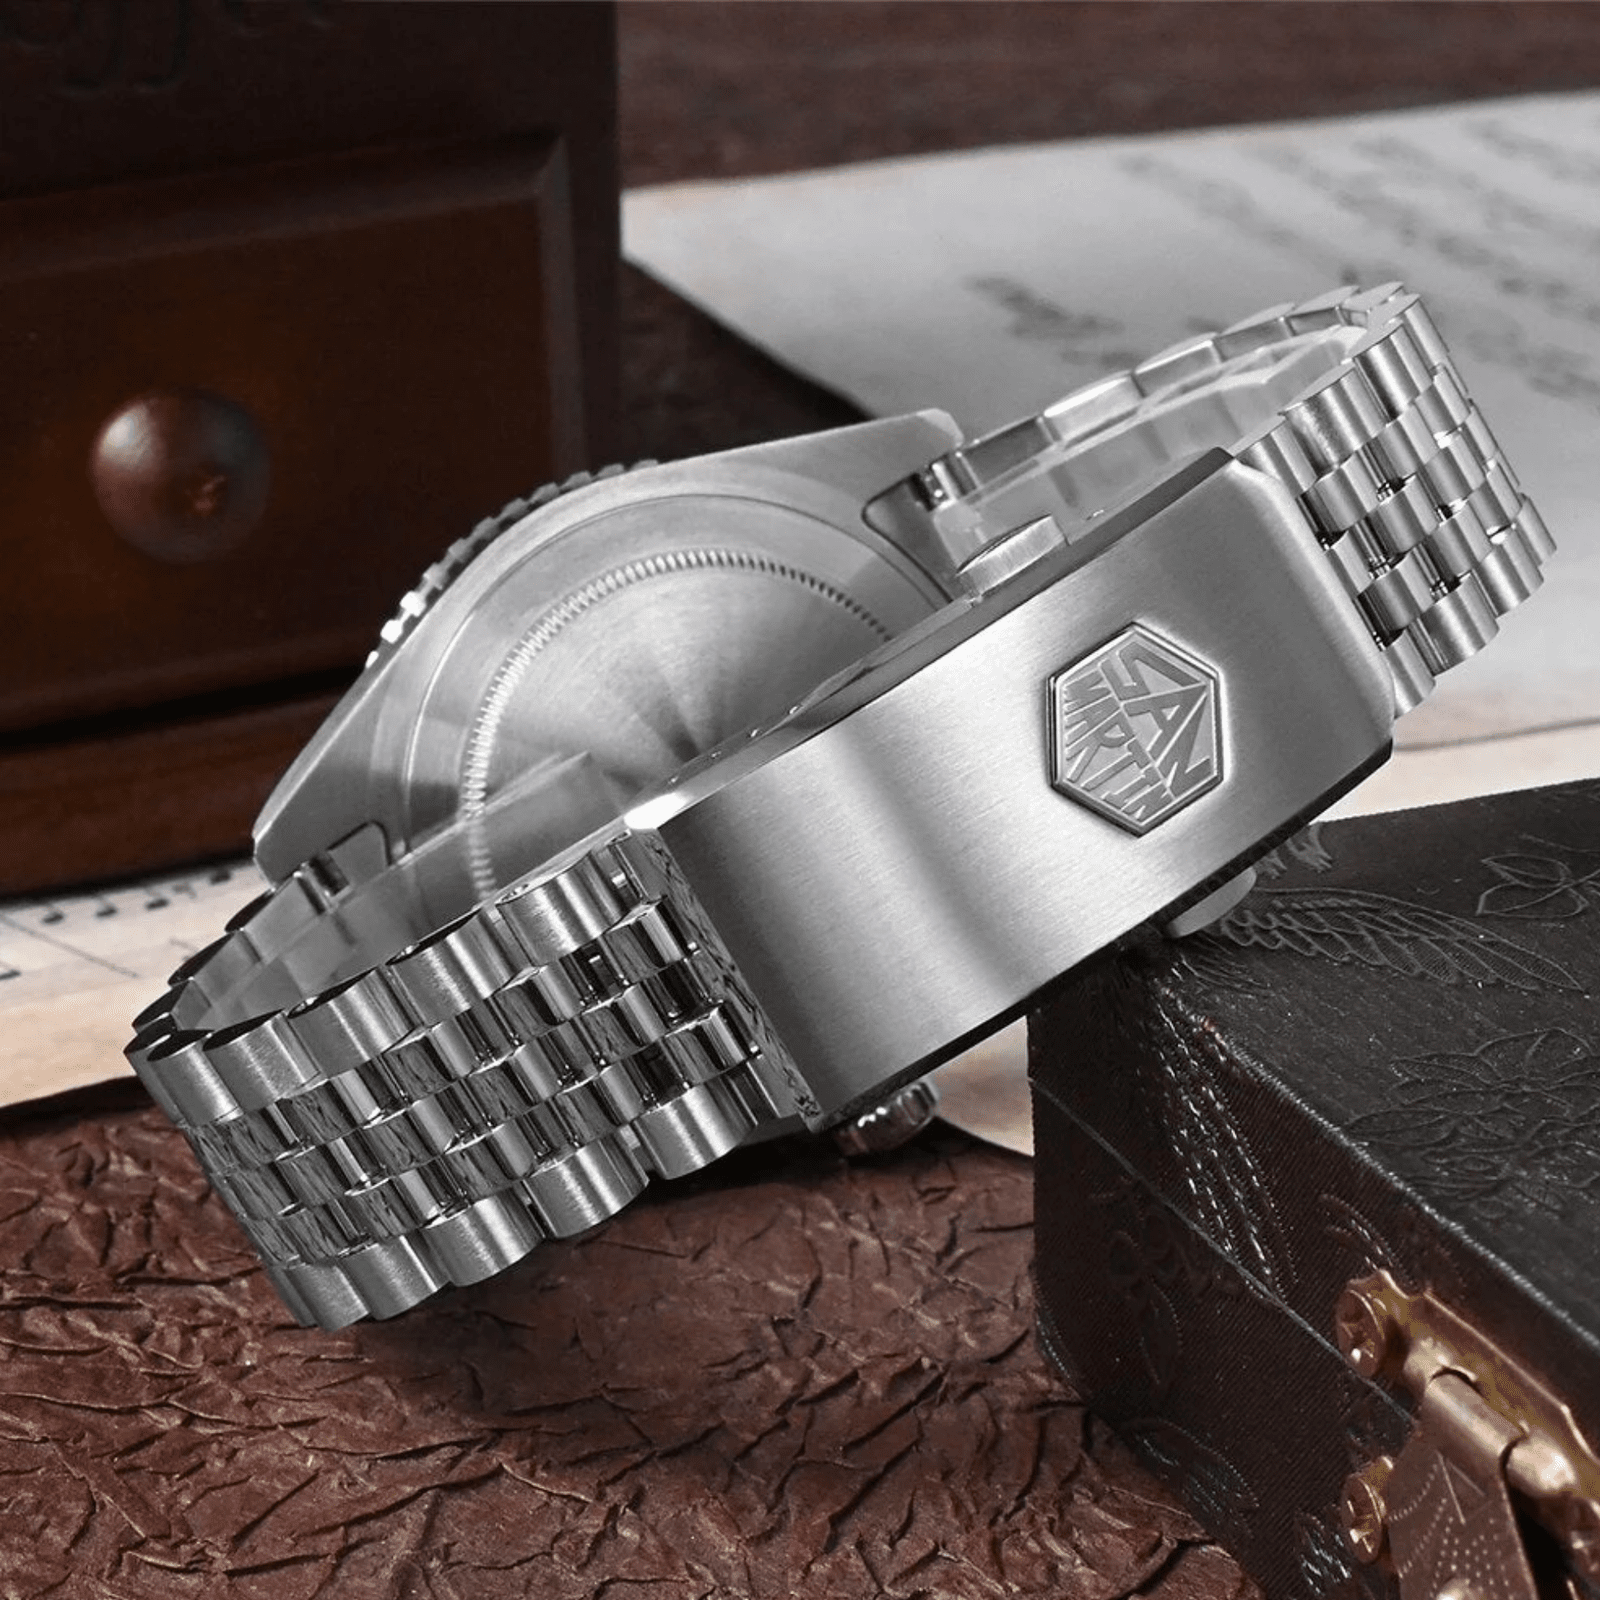 San Martin Vintage GMT Watch SN005-G2 - White san martin watches india online